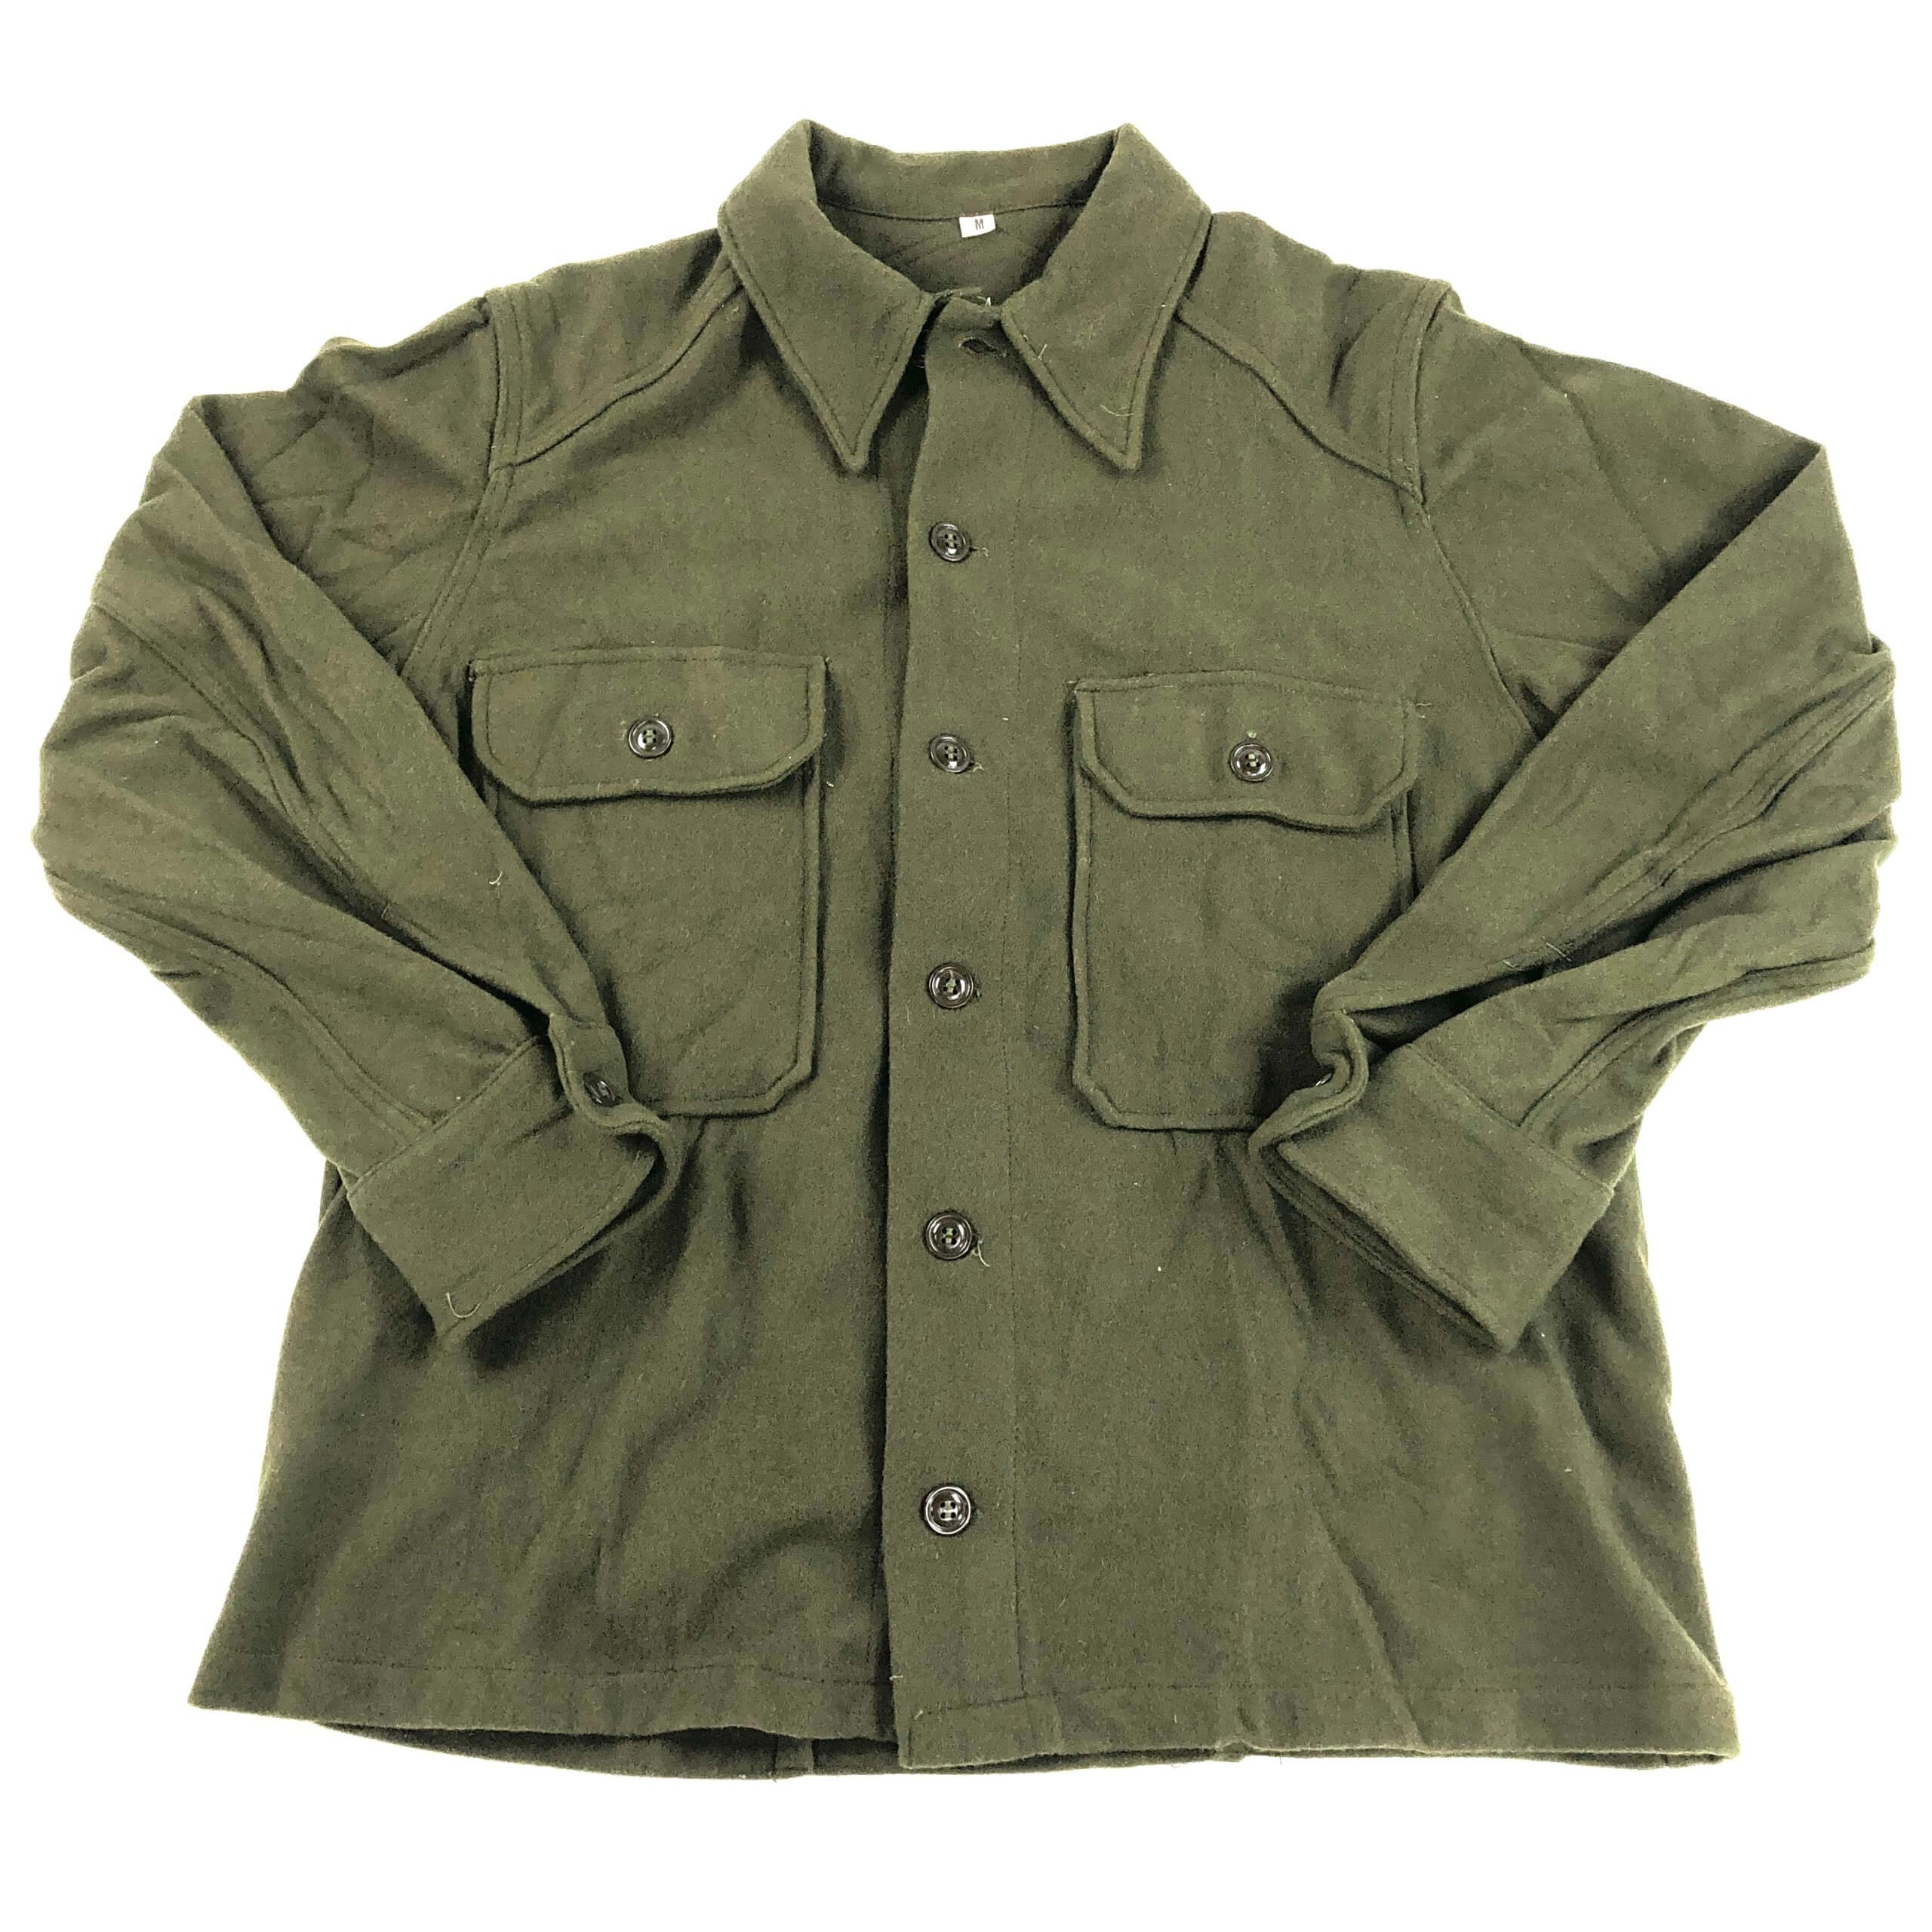 US Army OG 108 Winter Wool Shirt